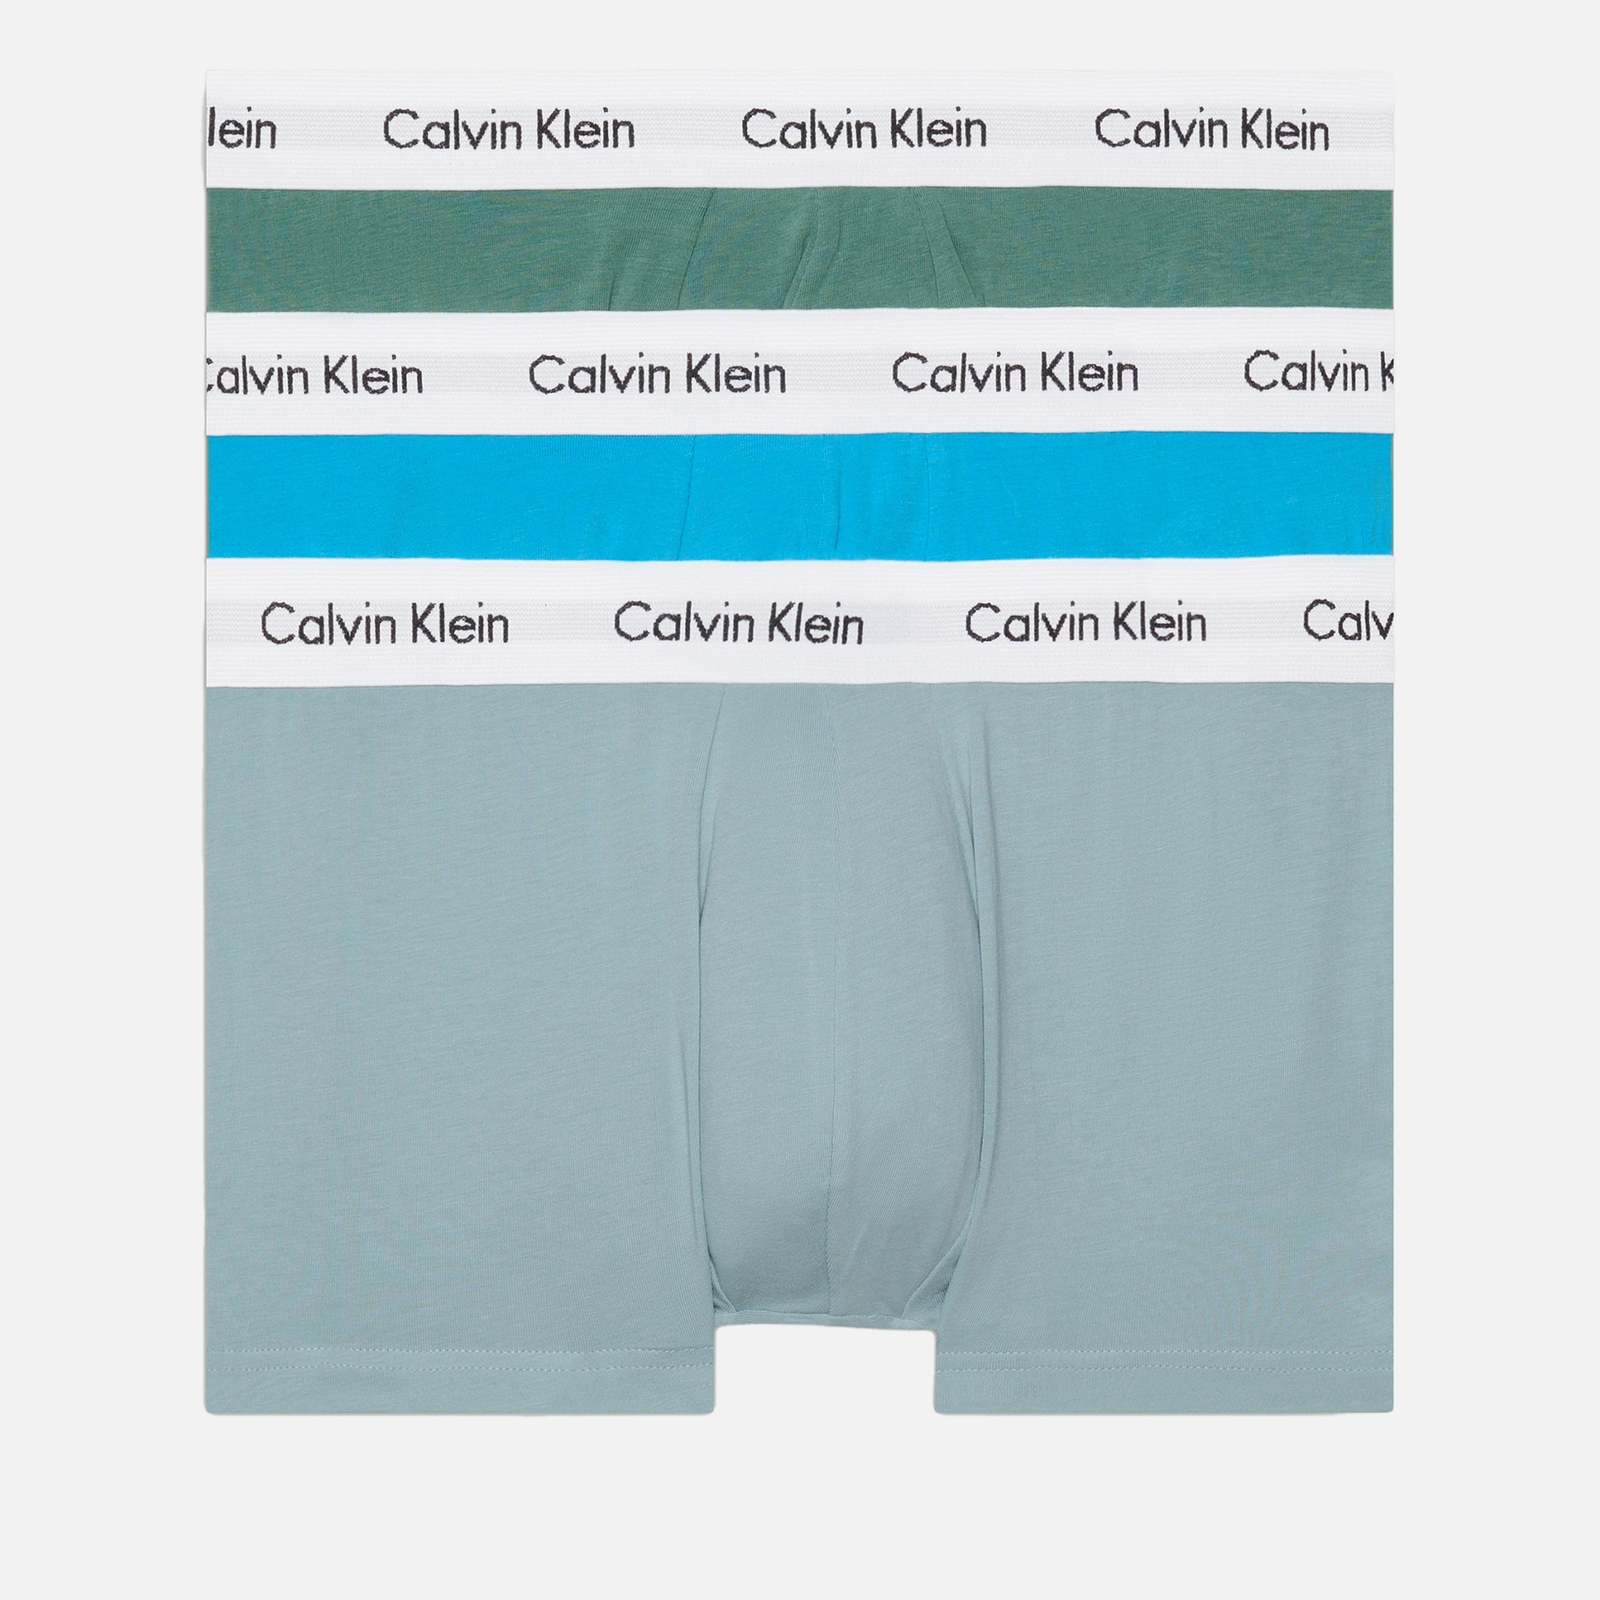 Calvin Klein 3-Pack Low Rise Cotton-Blend Trunks